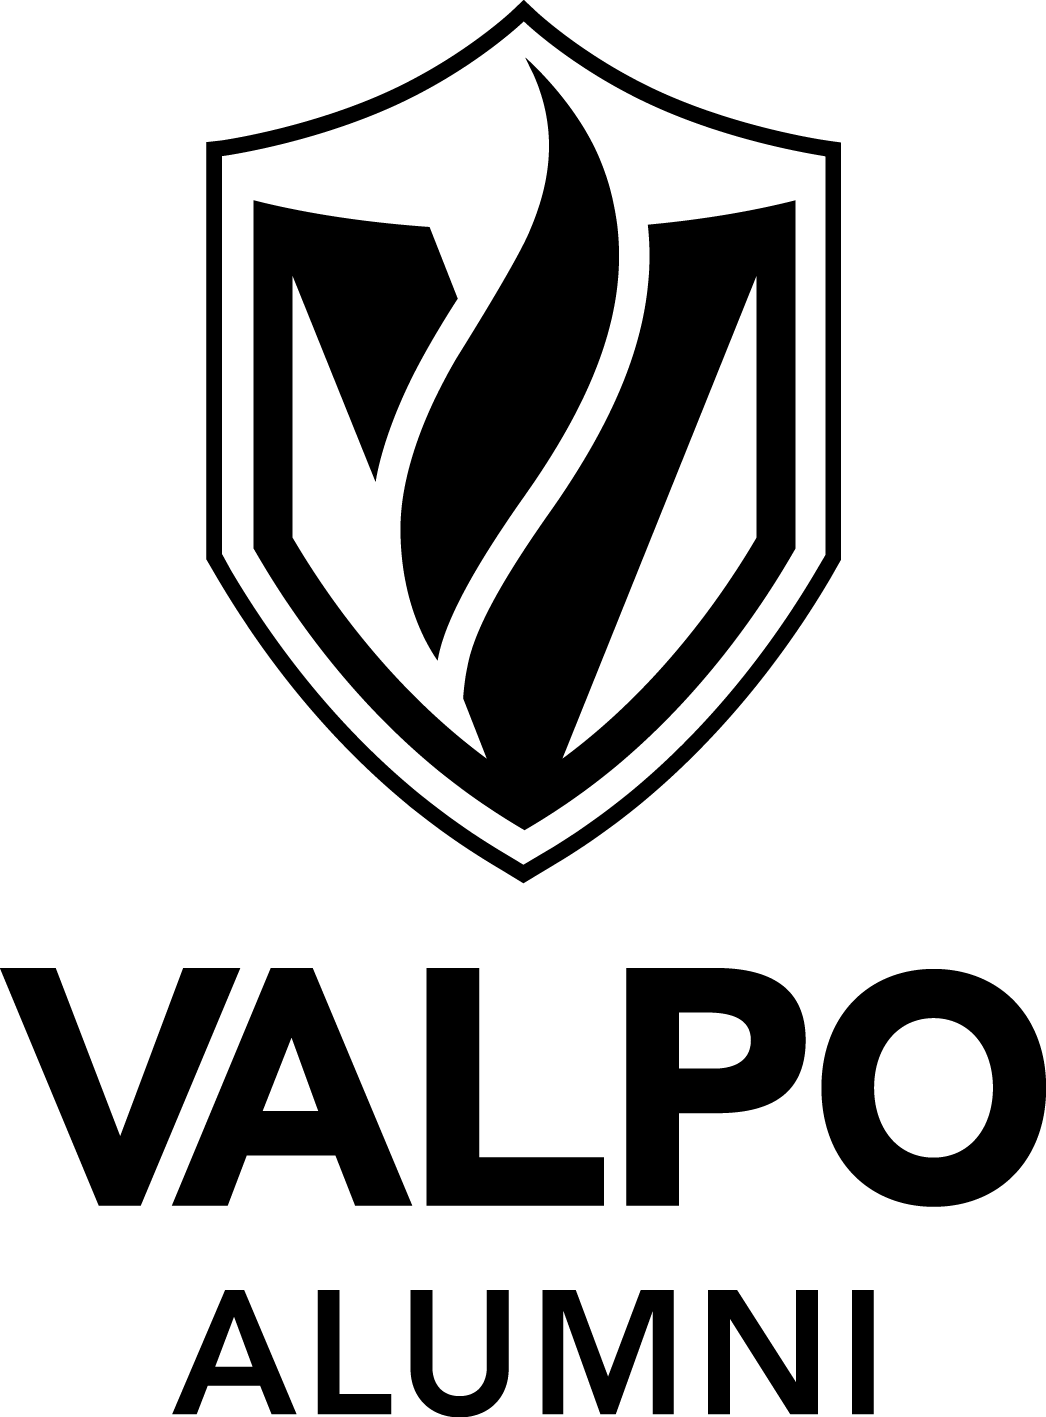 University Shield Logo - Download Logos. Valparaiso University Brand